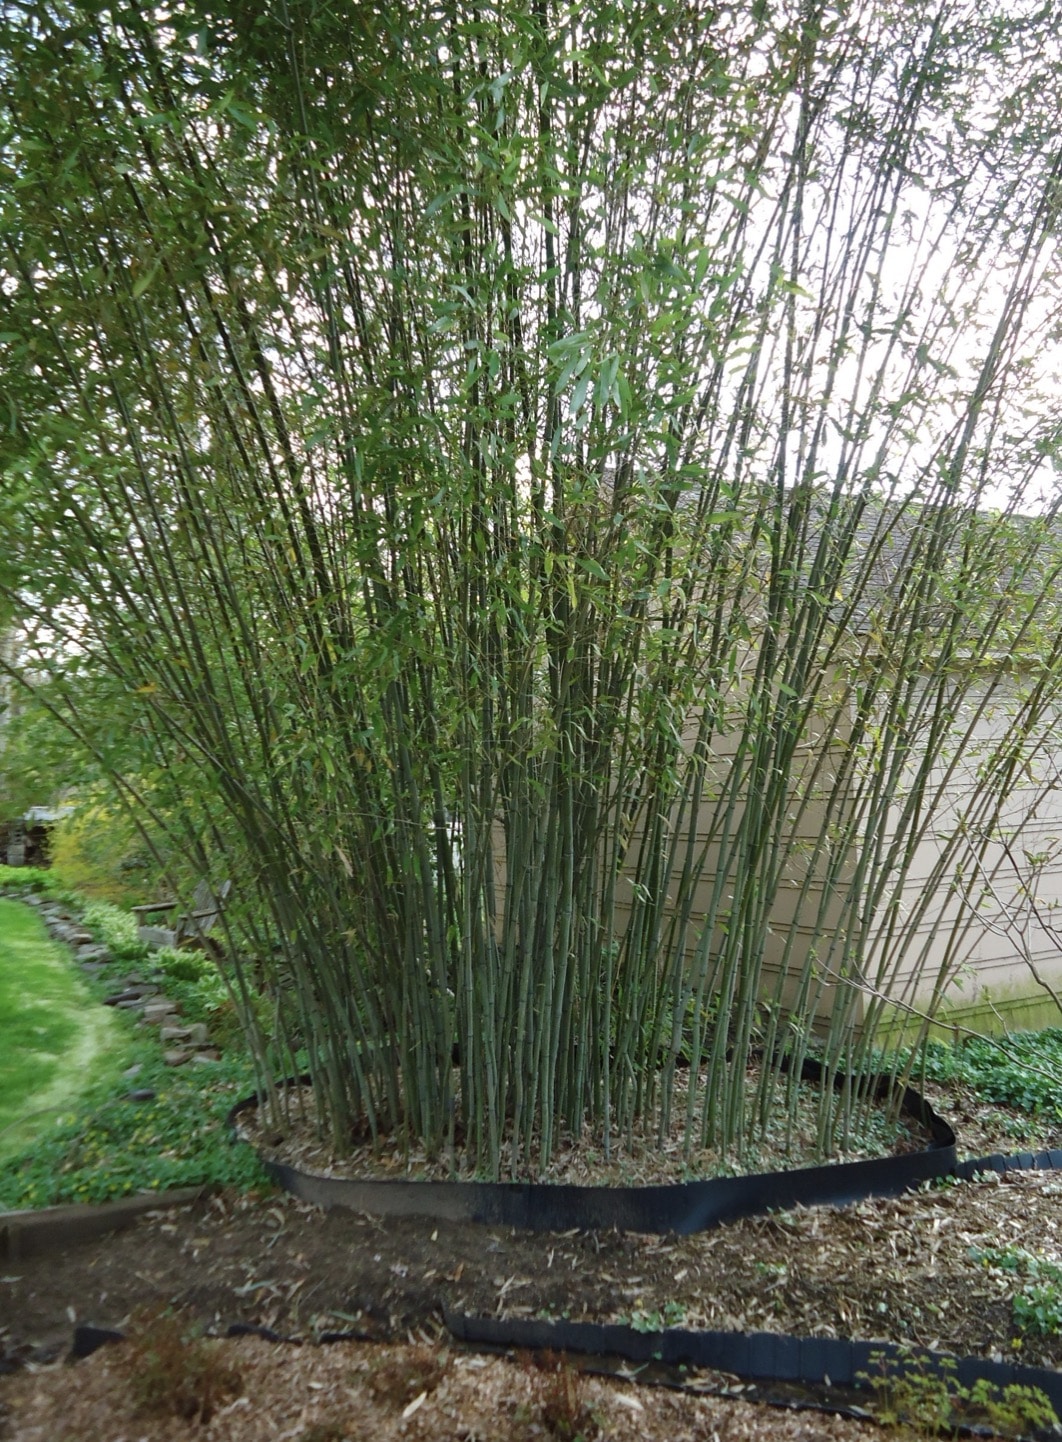 Growing bamboo in the backyard